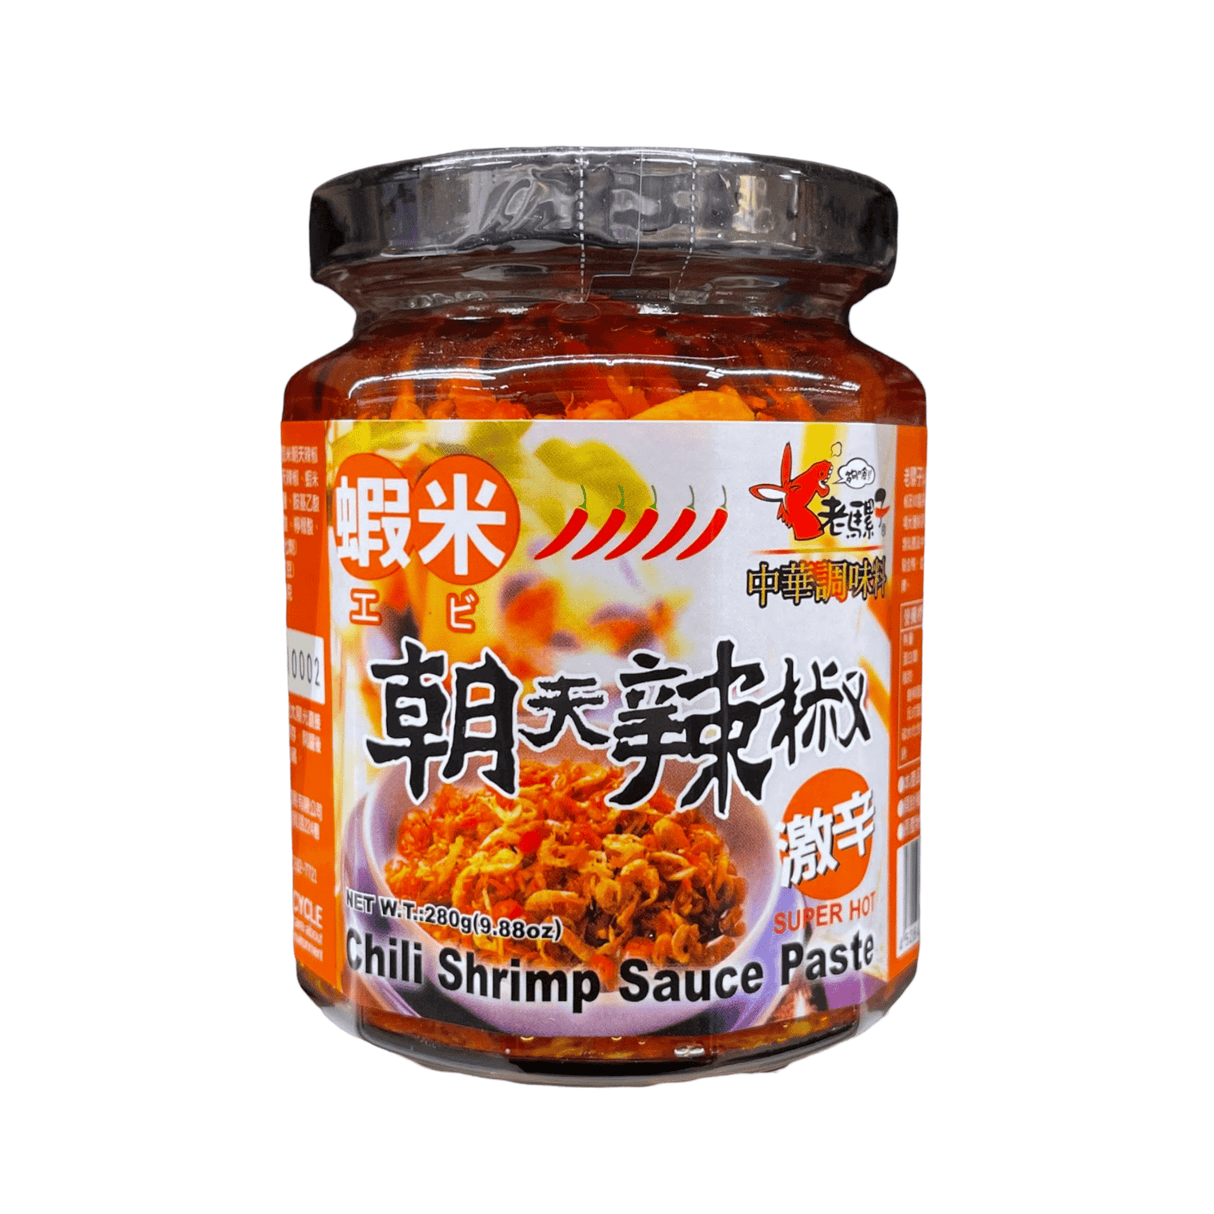 LLZ Chili Shrimp Sauce Paste Super Hot